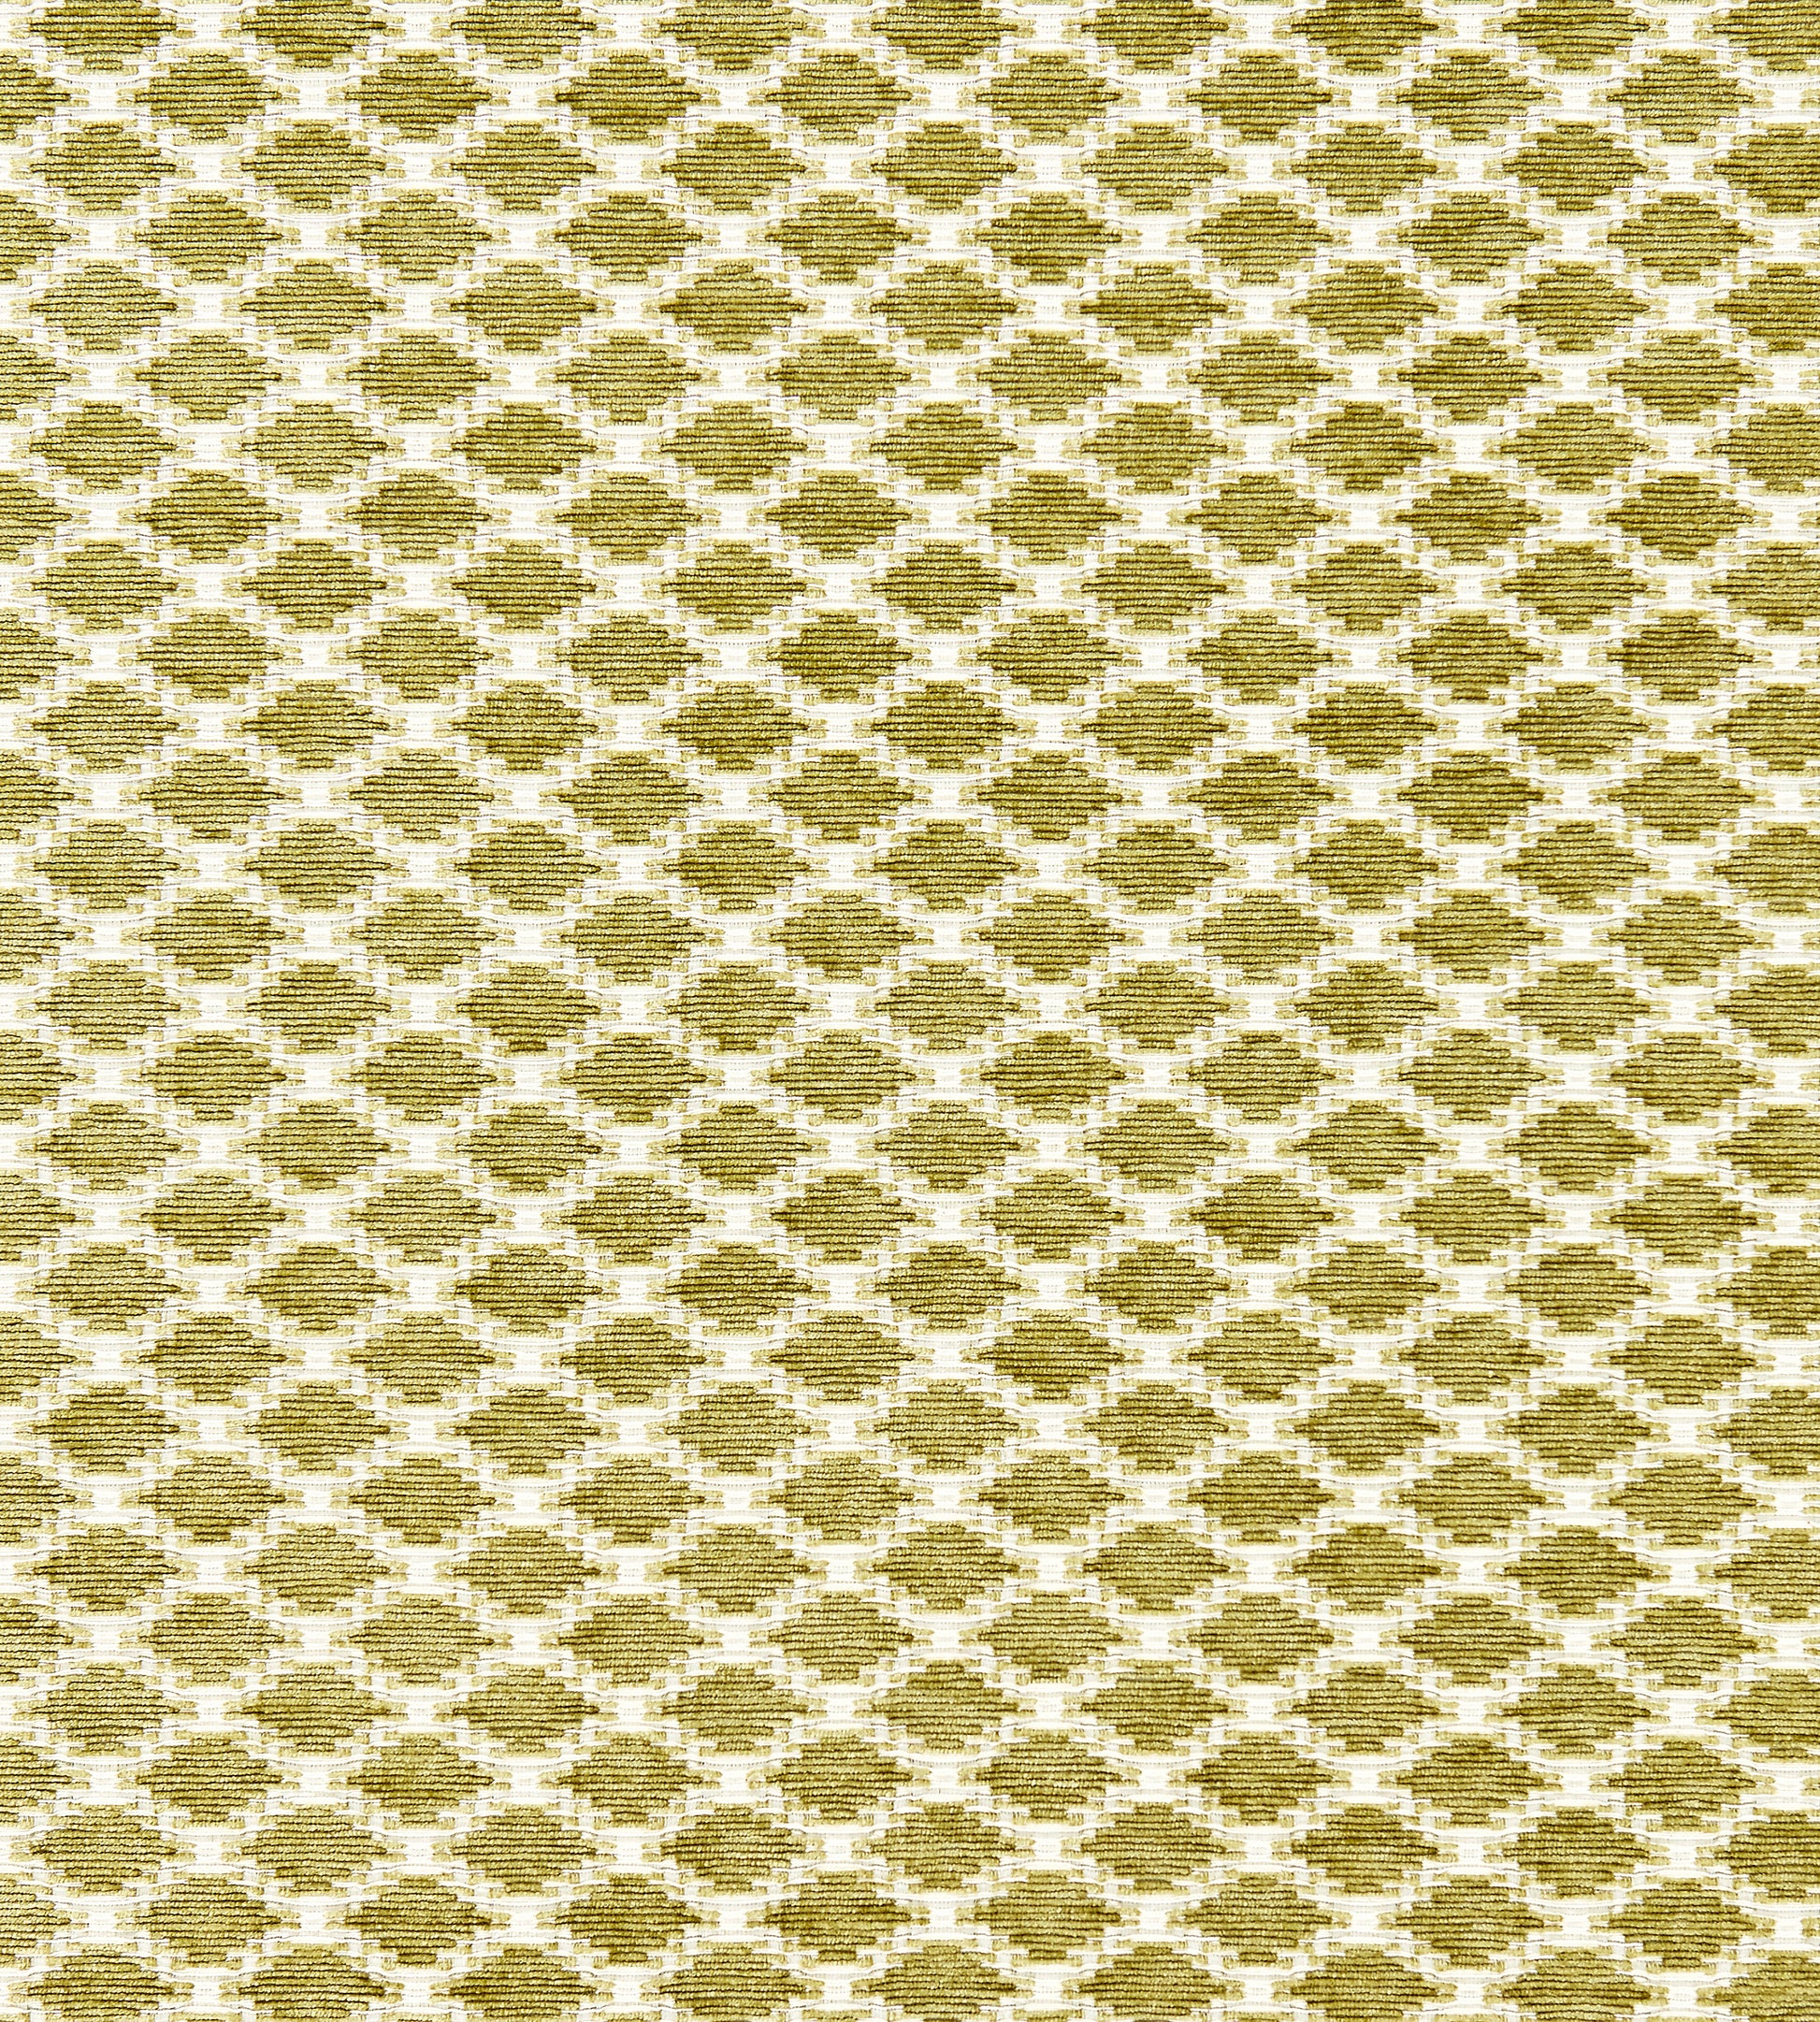 Purchase Scalamandre Fabric Pattern SC 000427101, Tristan Weave Fern 1